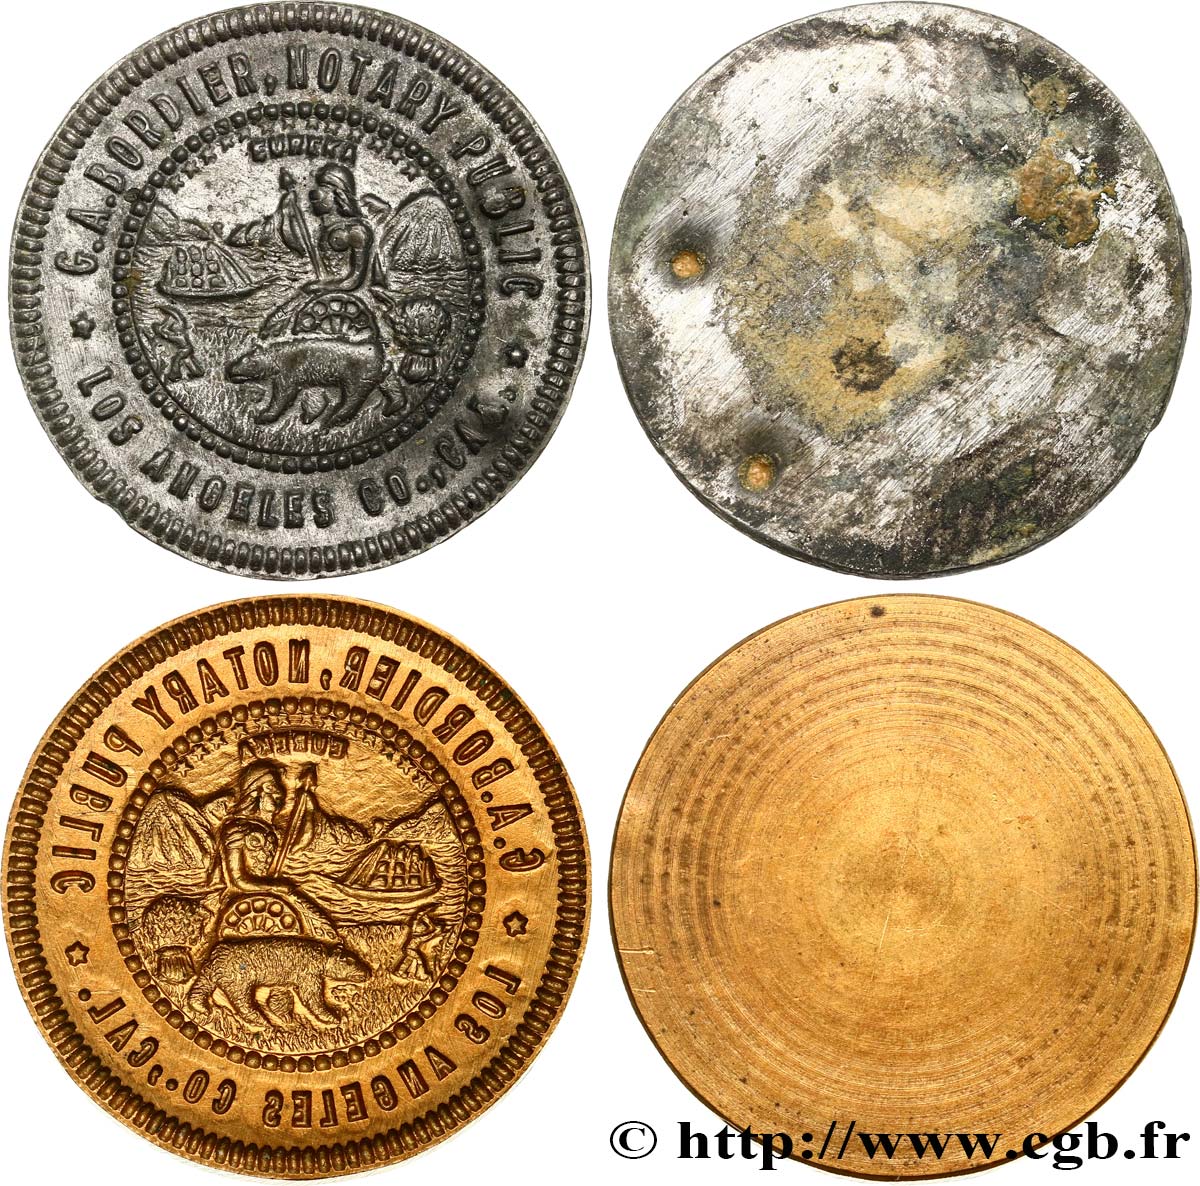 VEREINIGTE STAATEN VON AMERIKA Coin et empreinte d’un sceau de notaire américain SS